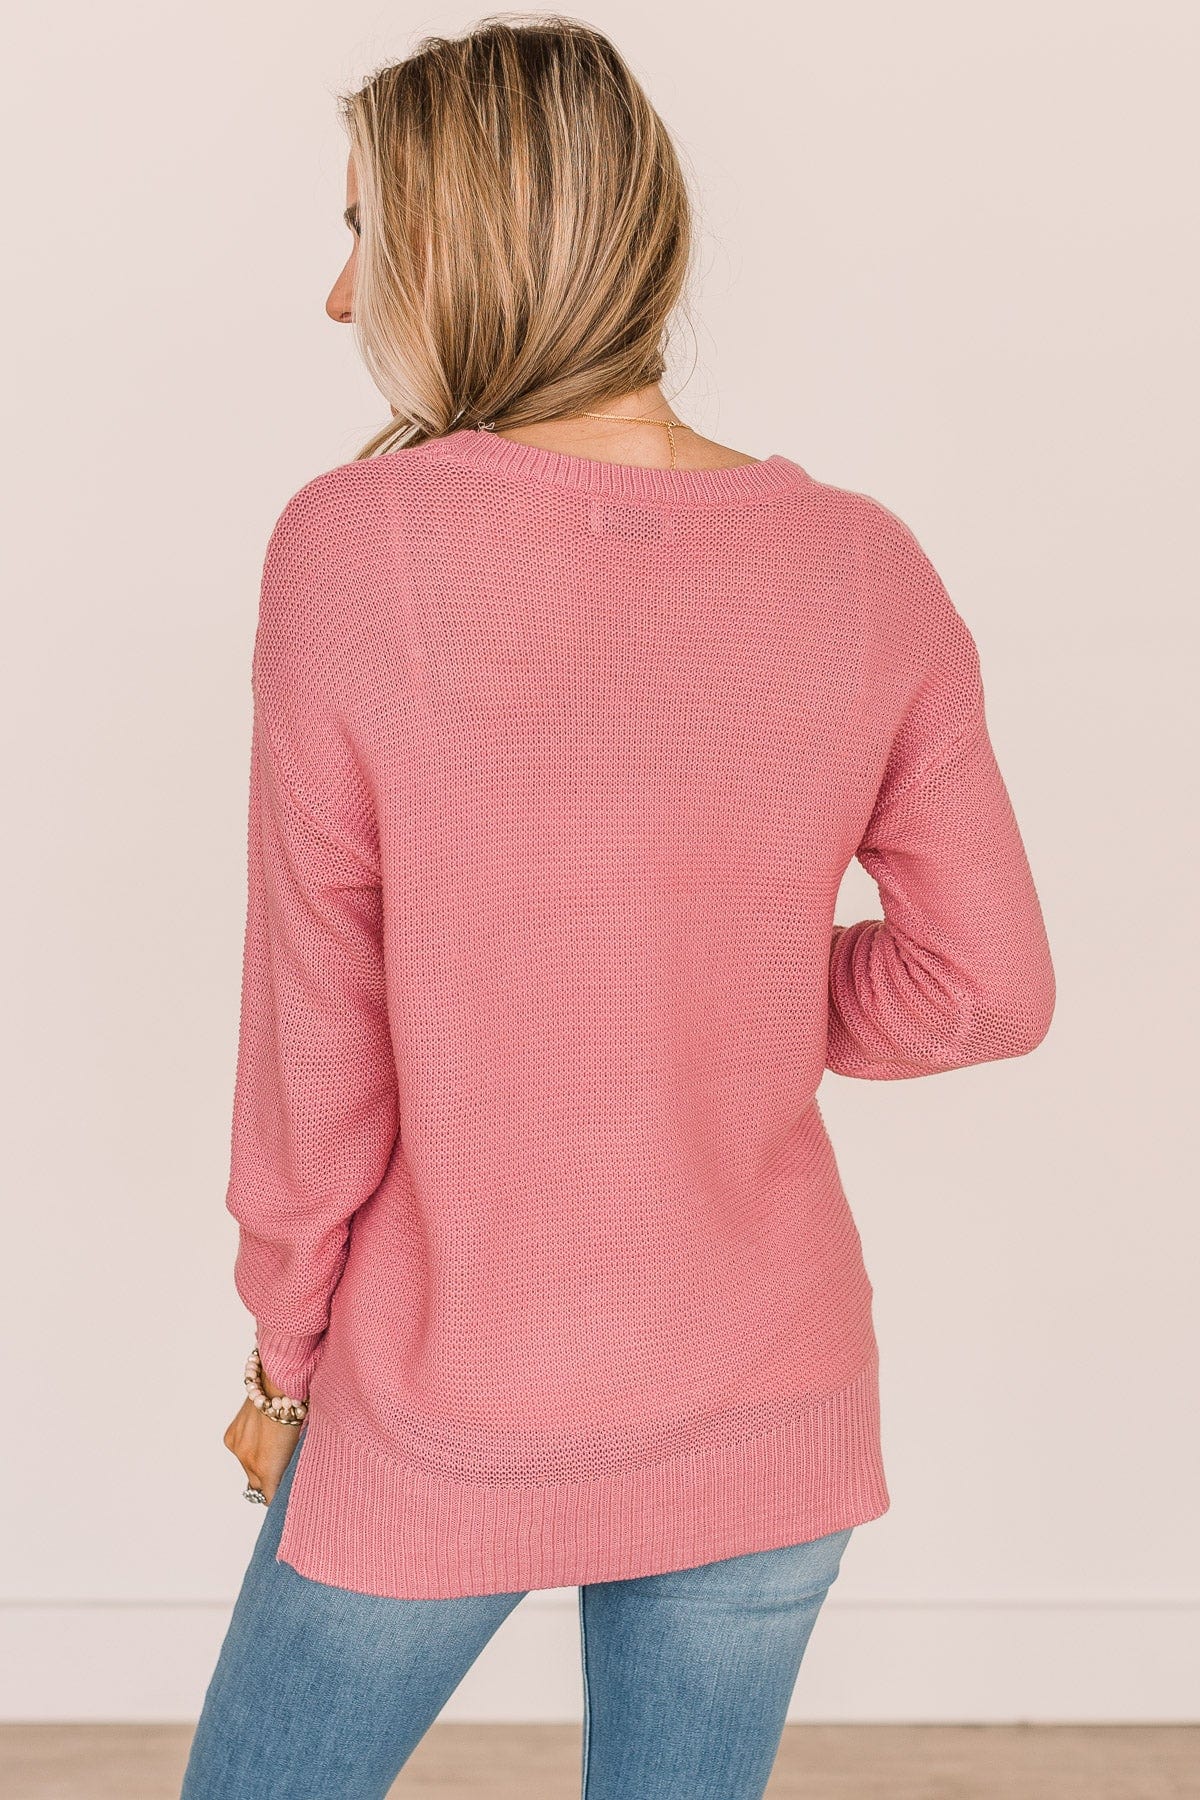 Be Fashionable Knit Sweater- Pink